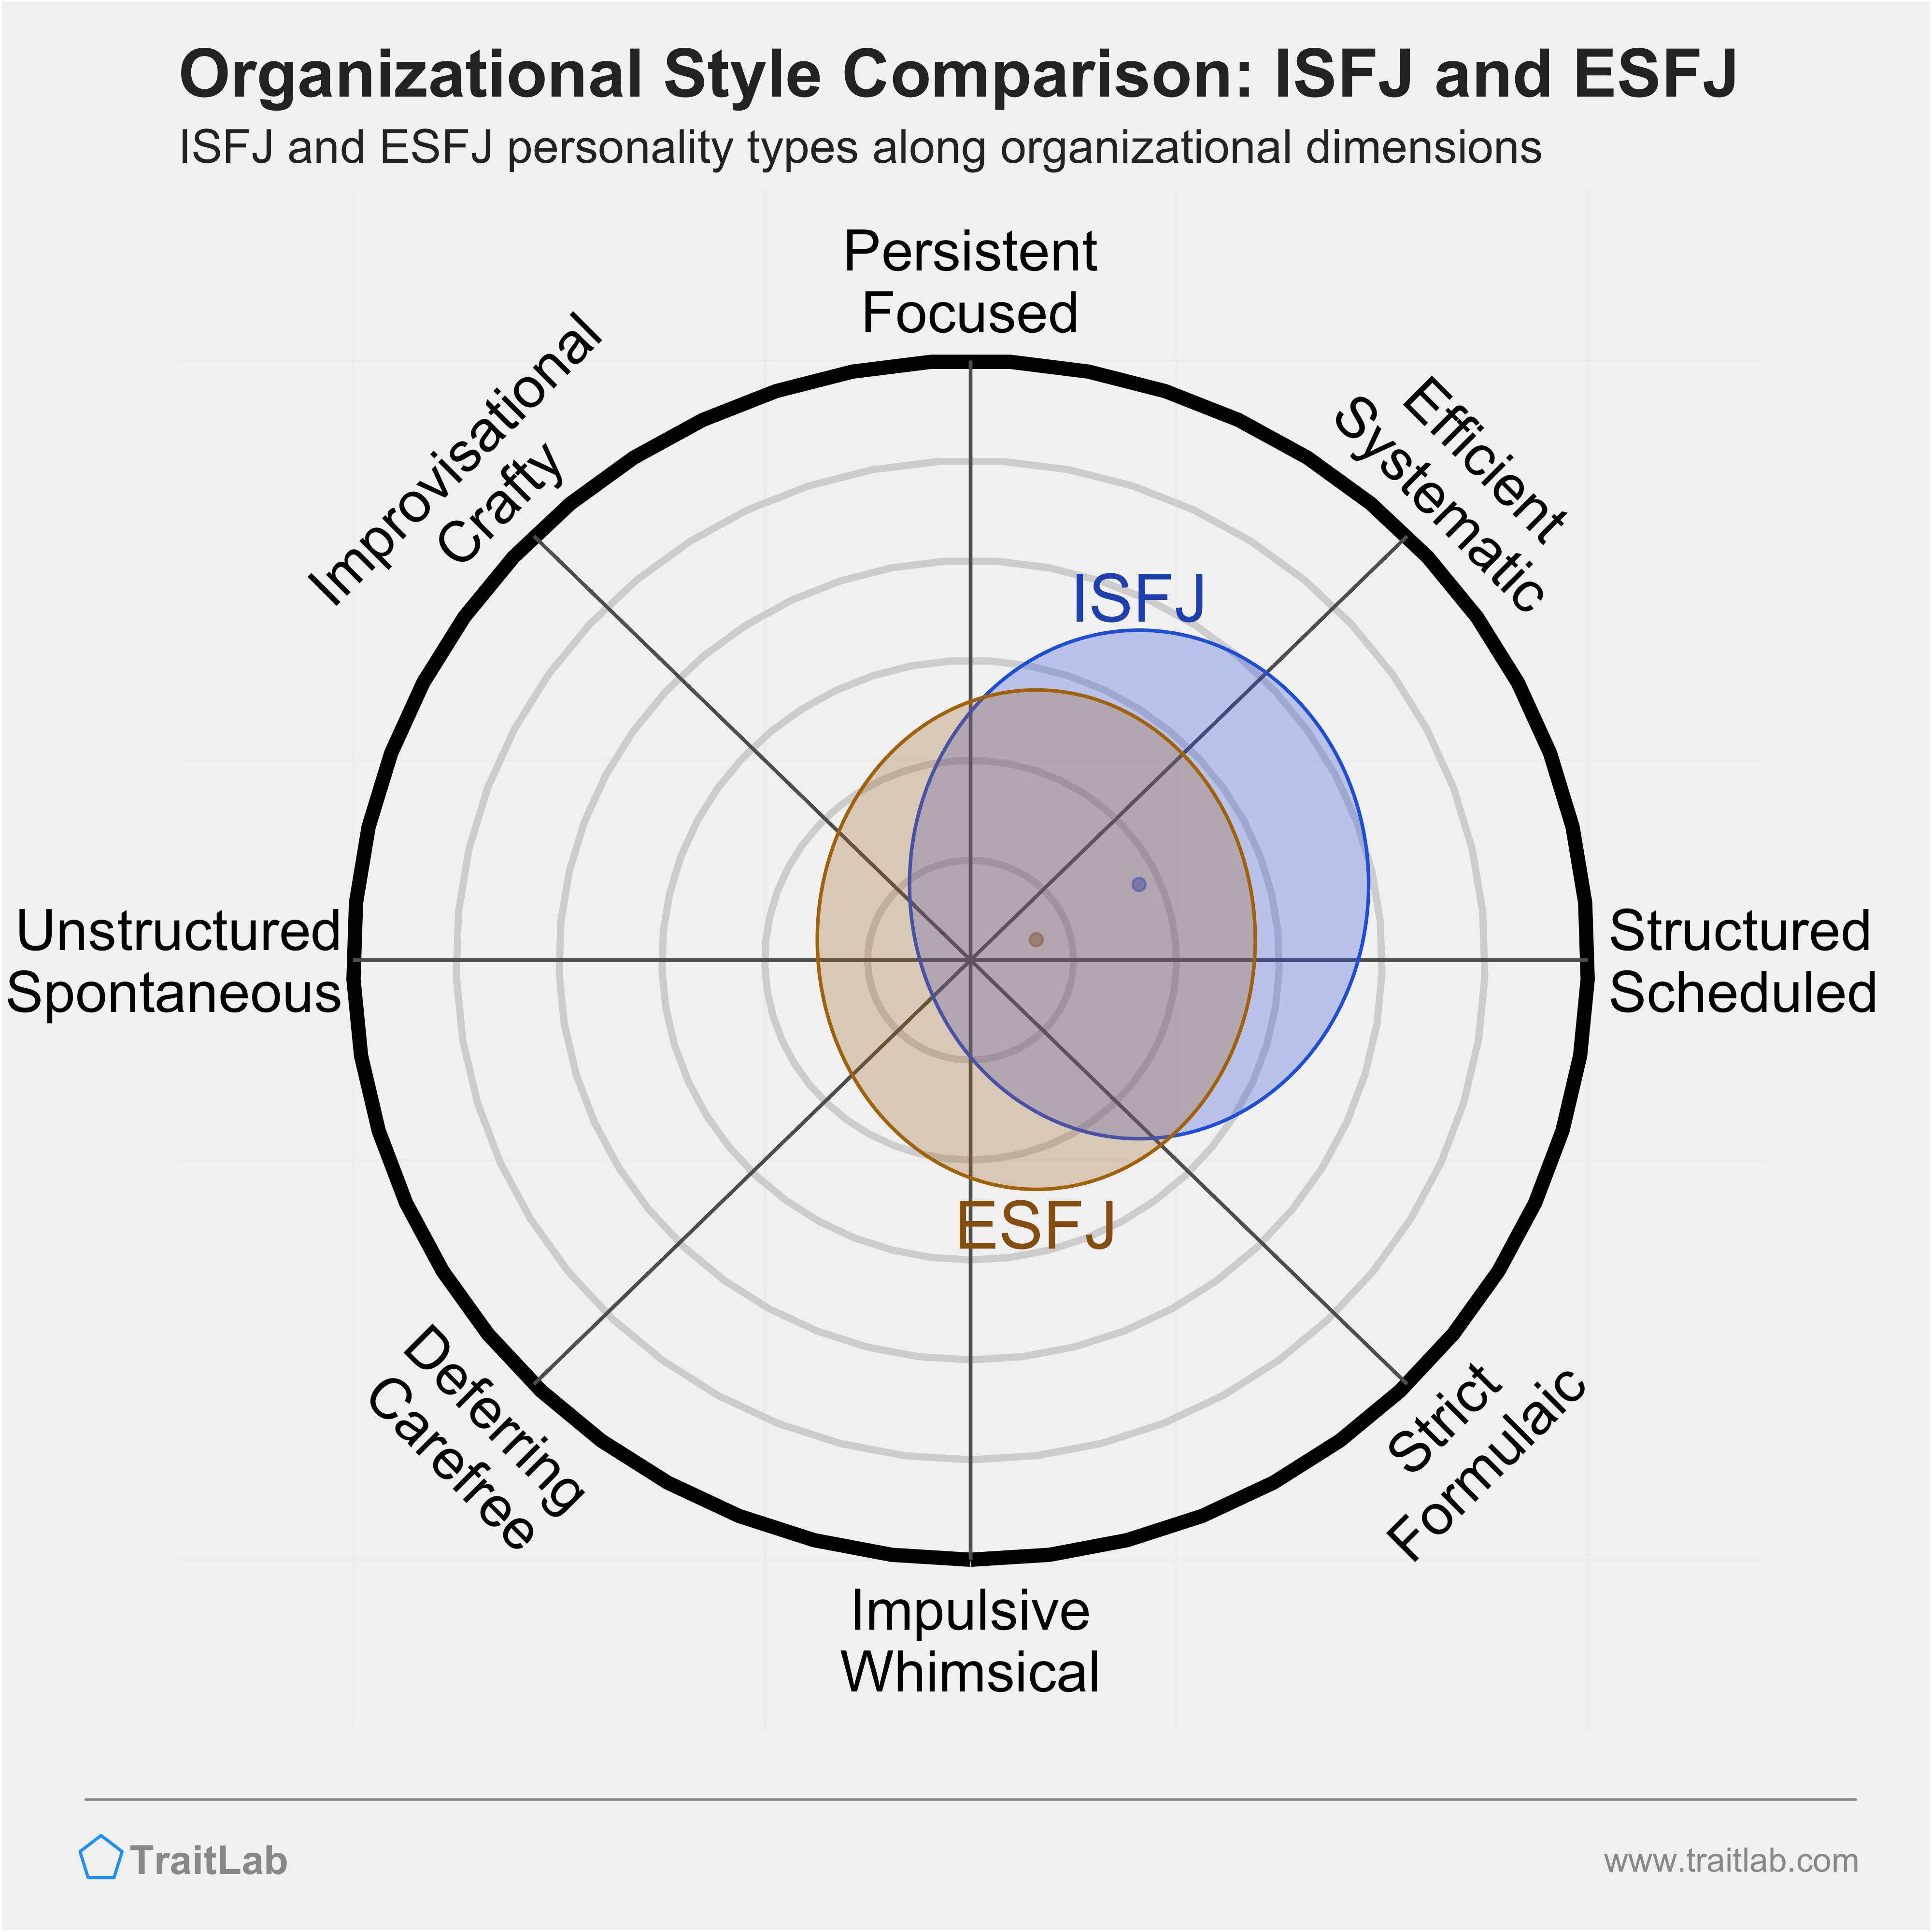 ISFJ and ESFJ comparison across organizational dimensions